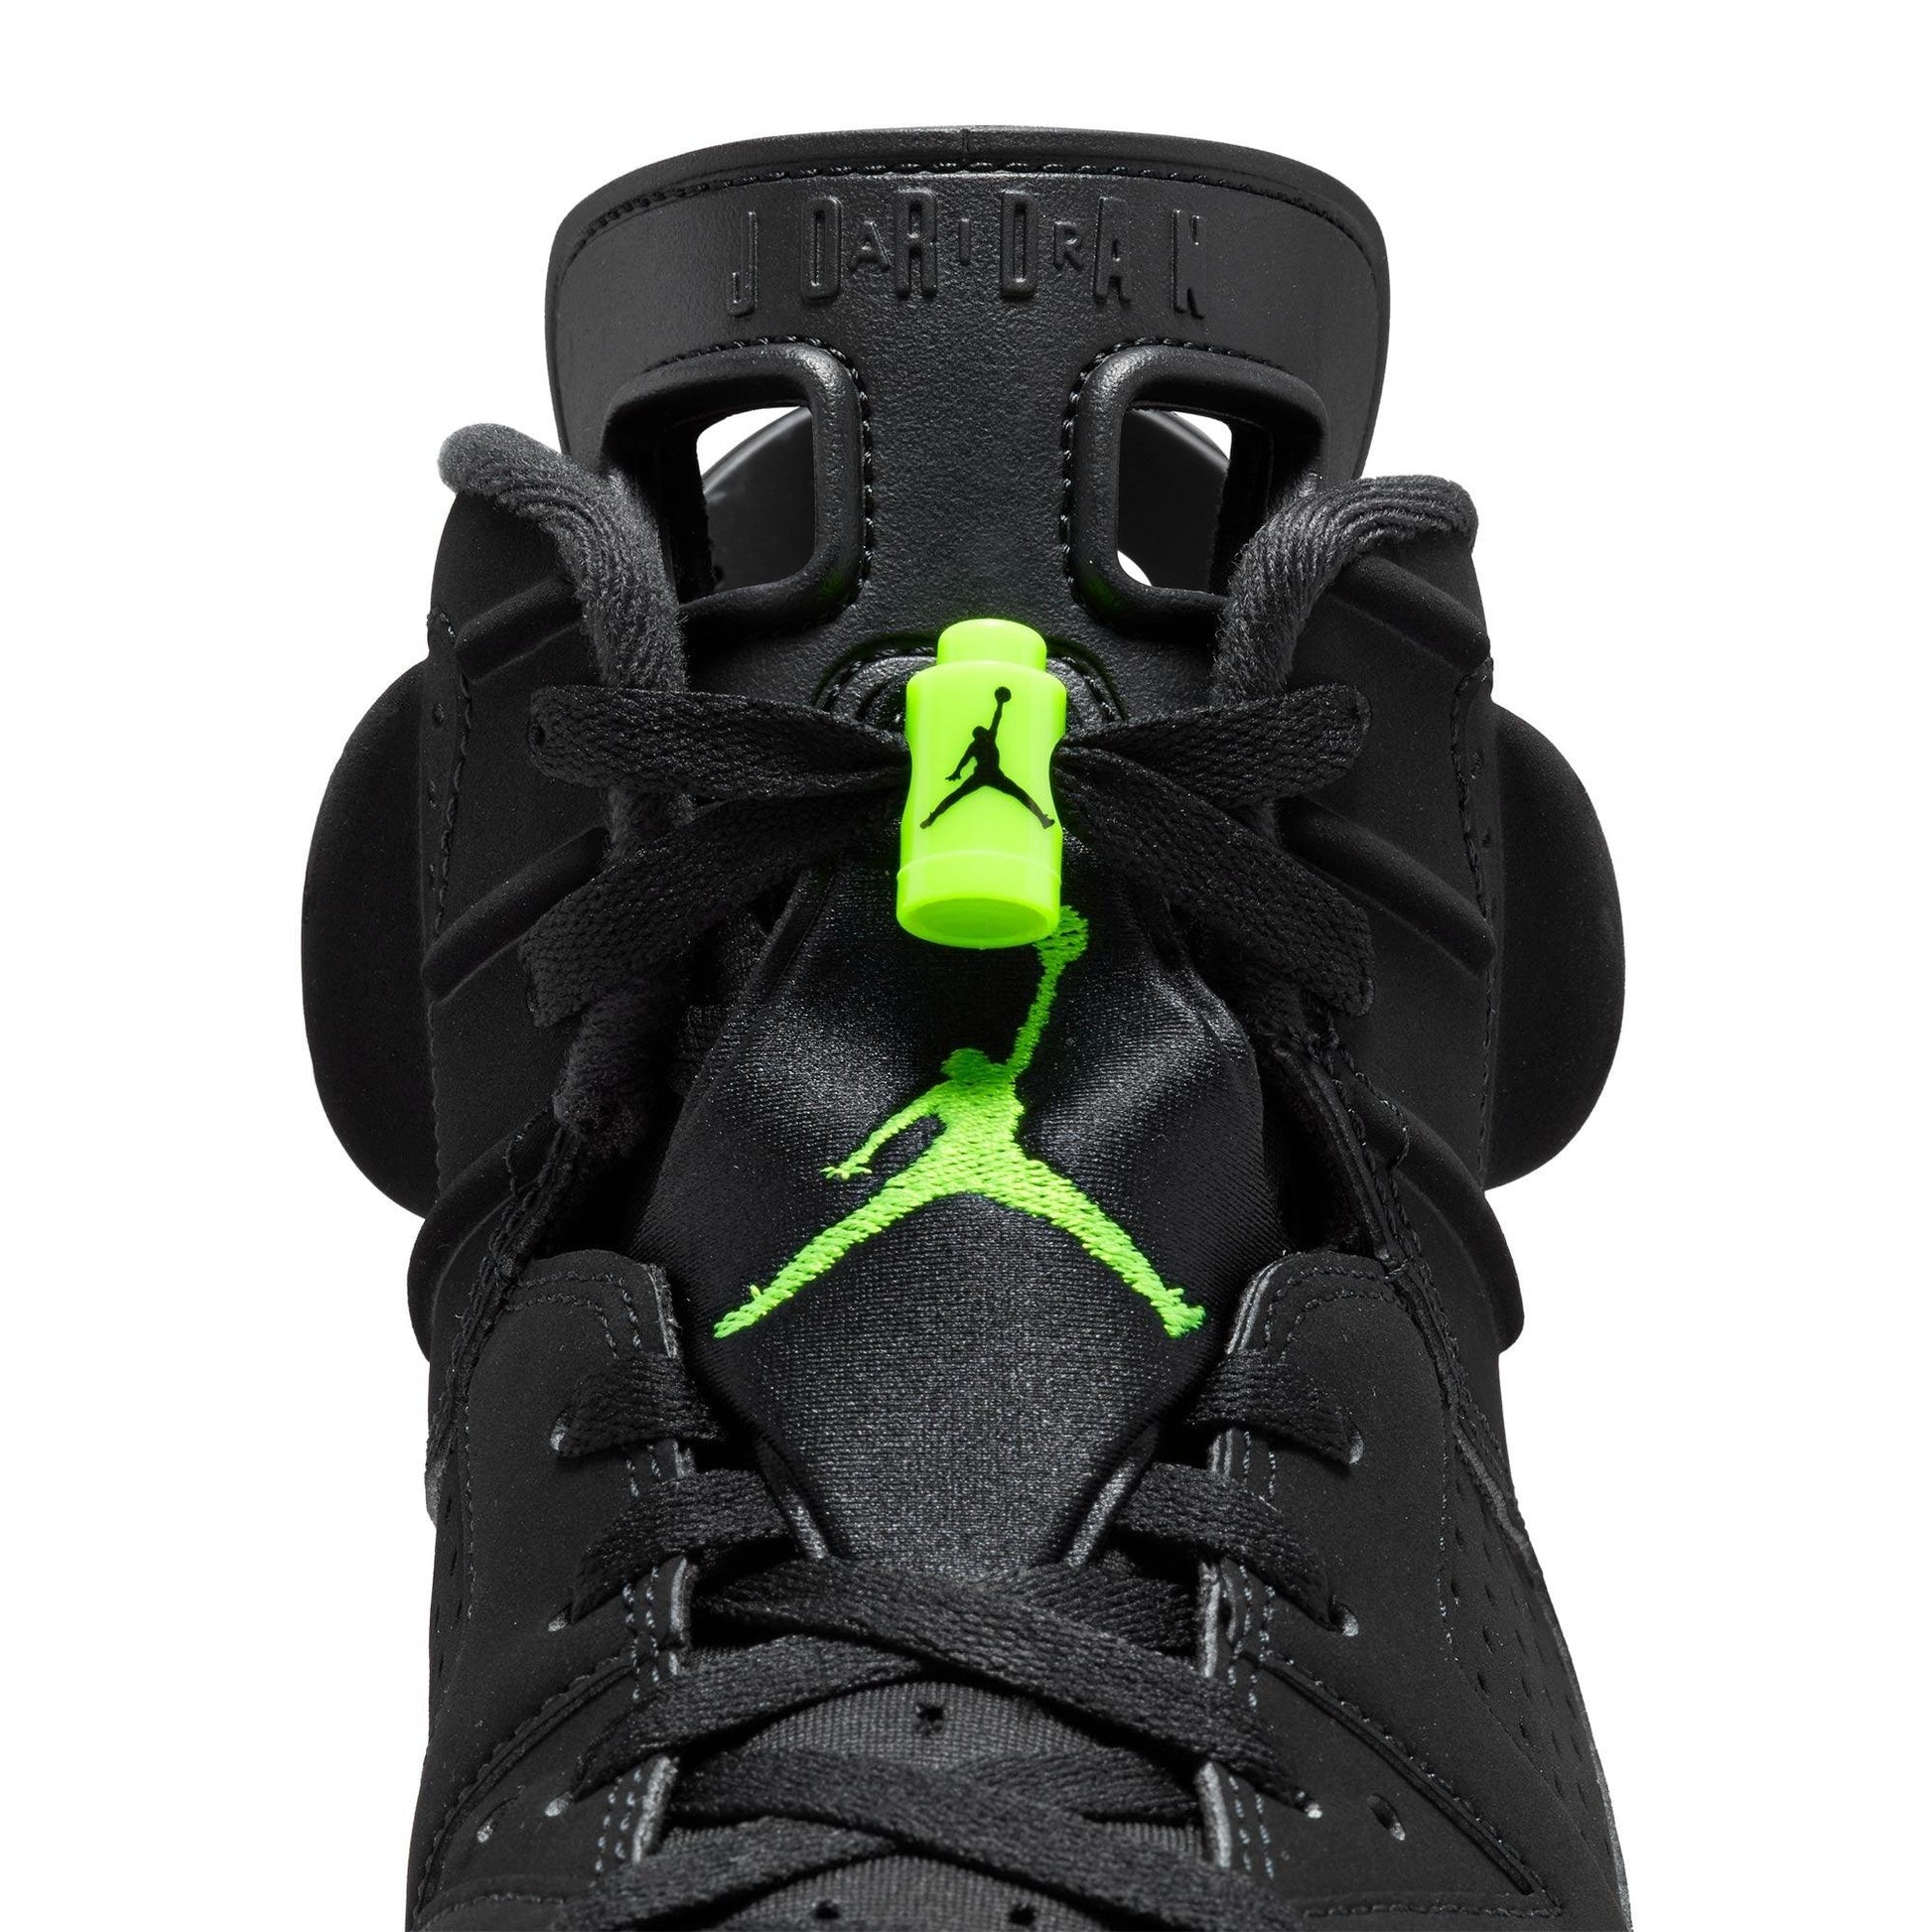 Nike Air Jordan 6 “Electric Green” Men's Basketball Shoes - CADEAUME